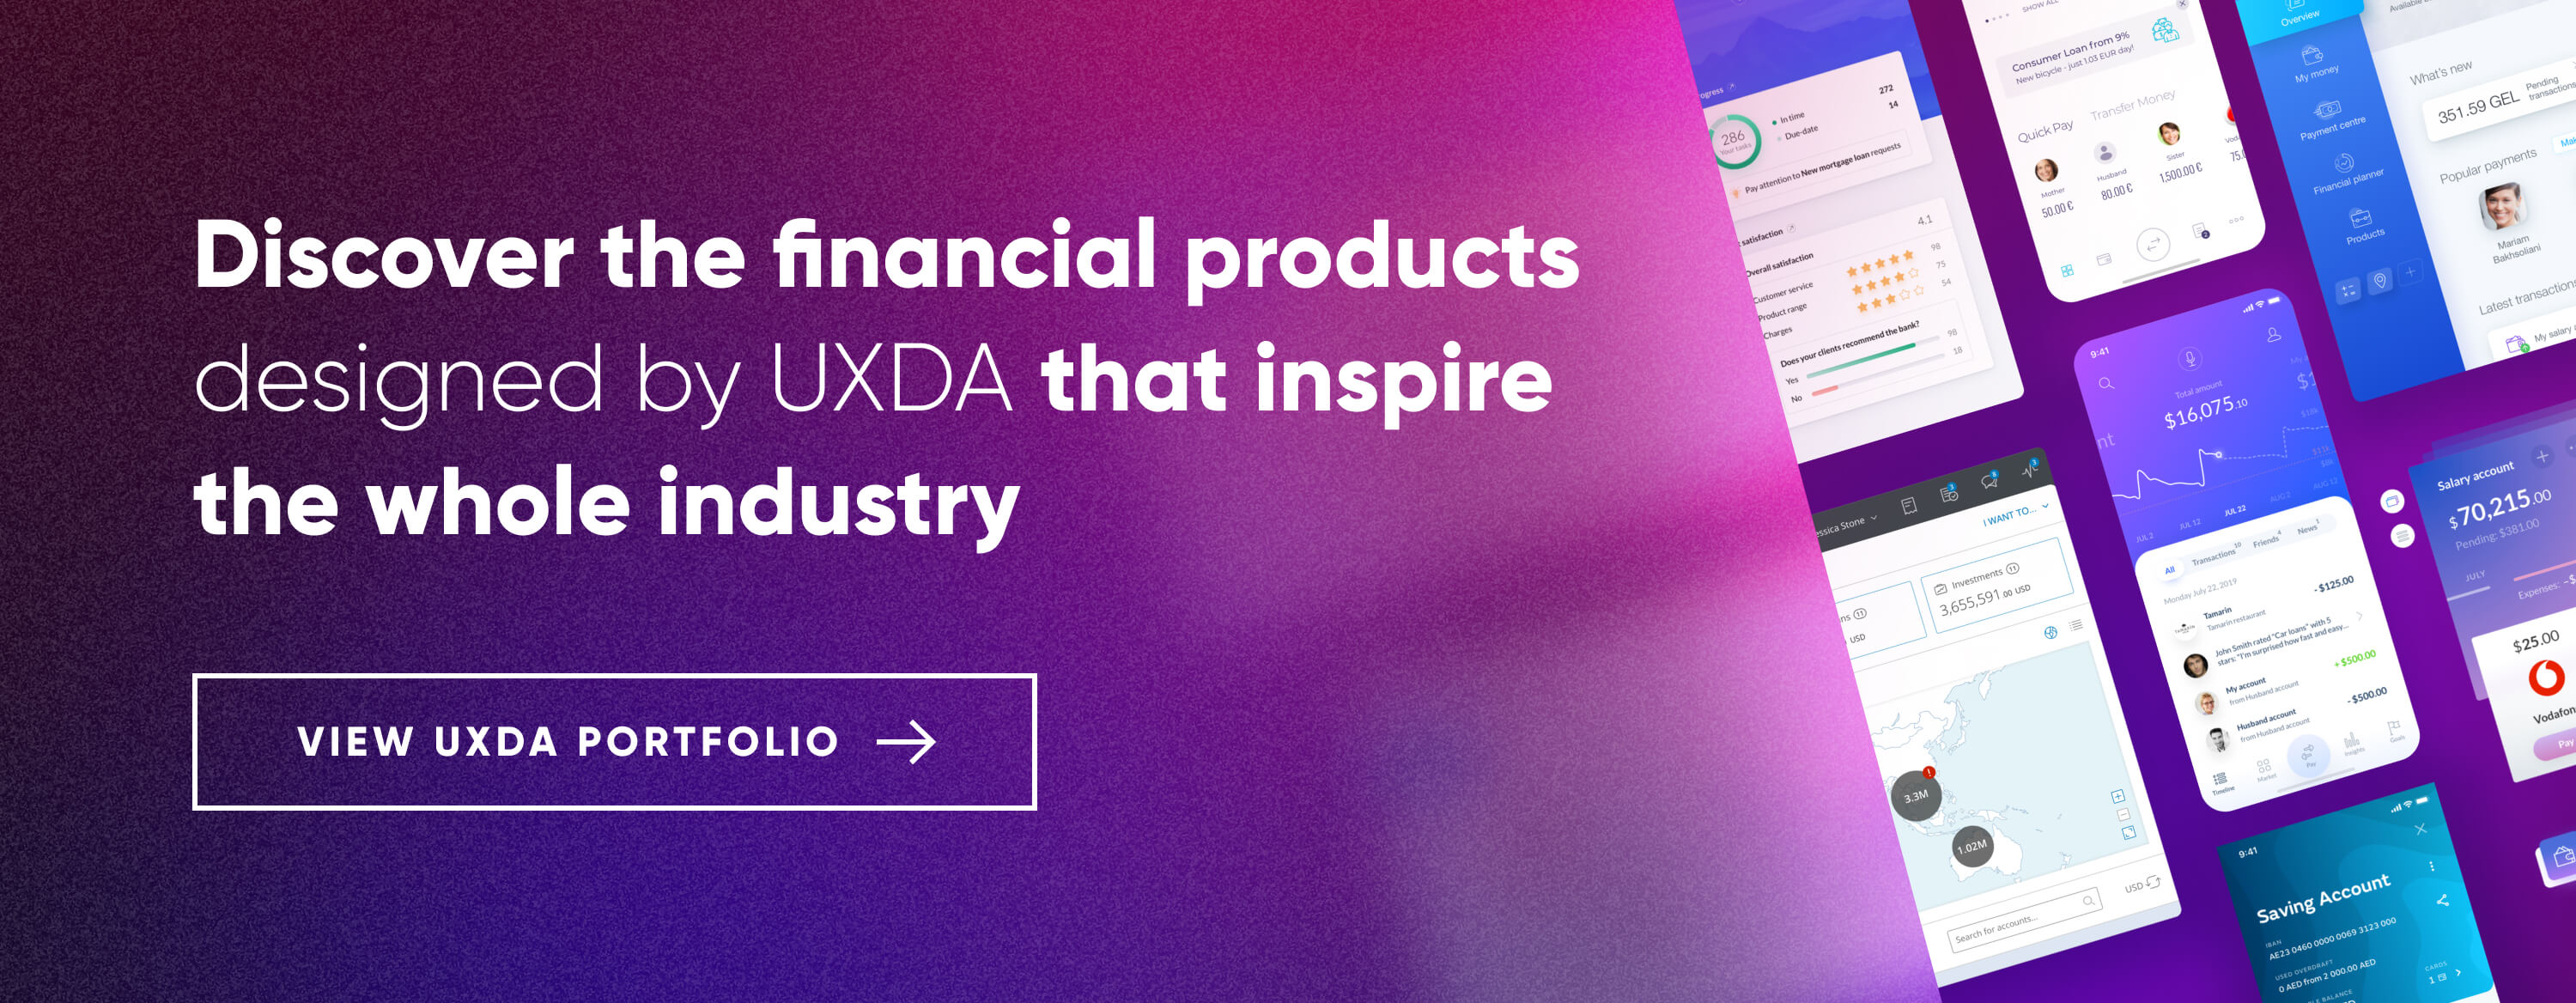 uxda-portfolio-financial-digital-product-inspire-industry-ux-1669631620.jpg